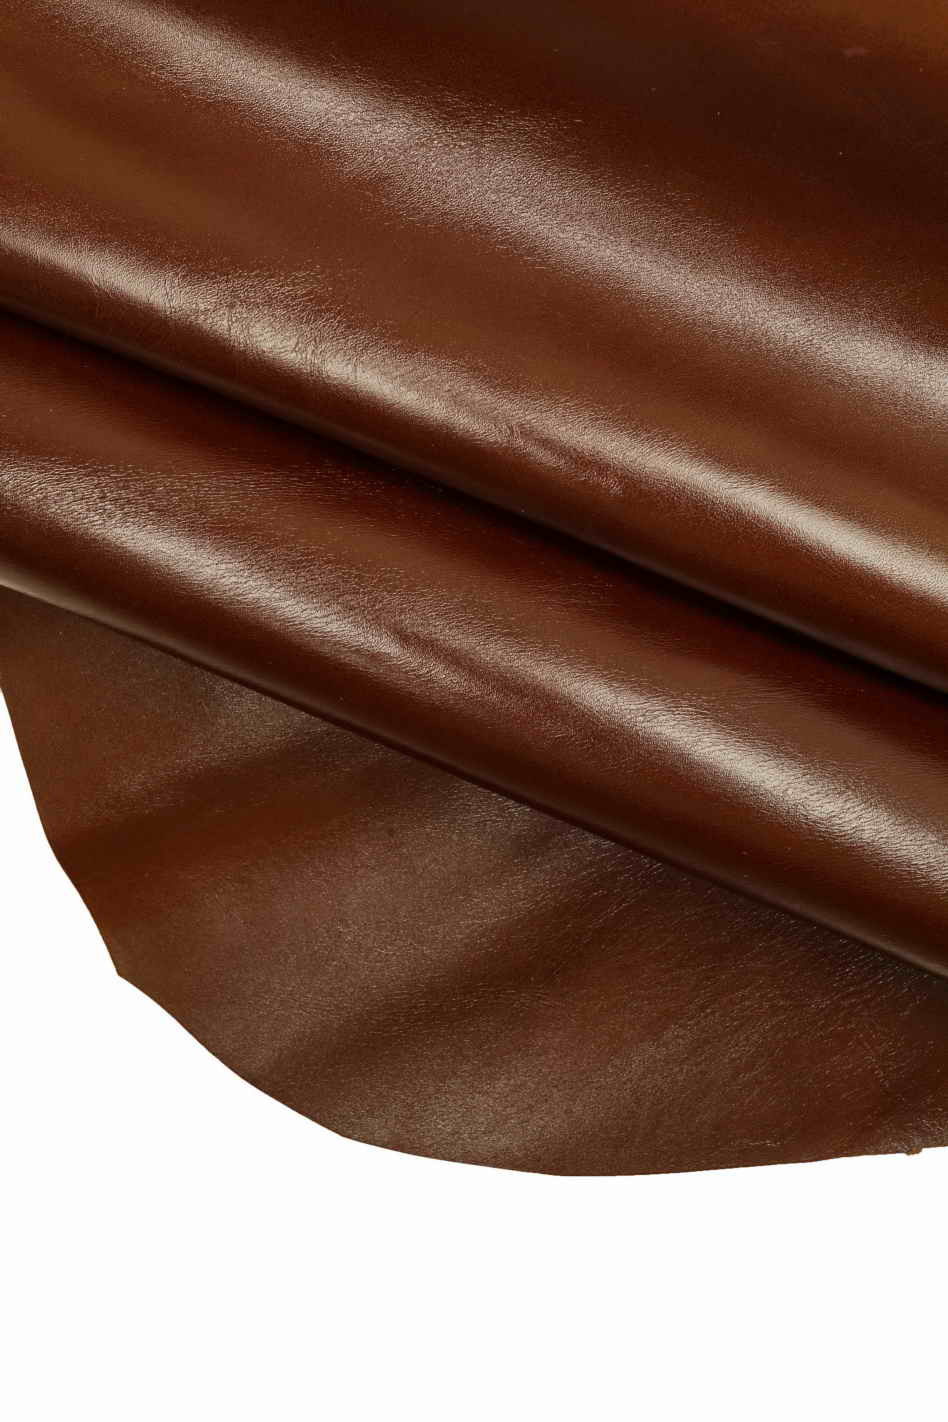 https://www.lagarzarara.com/27477-thickbox_default/italian-leather-brown-half-calfskin-super-shiny-wrinkled-look-a-little-stiff-vintage-sporty-look.jpg